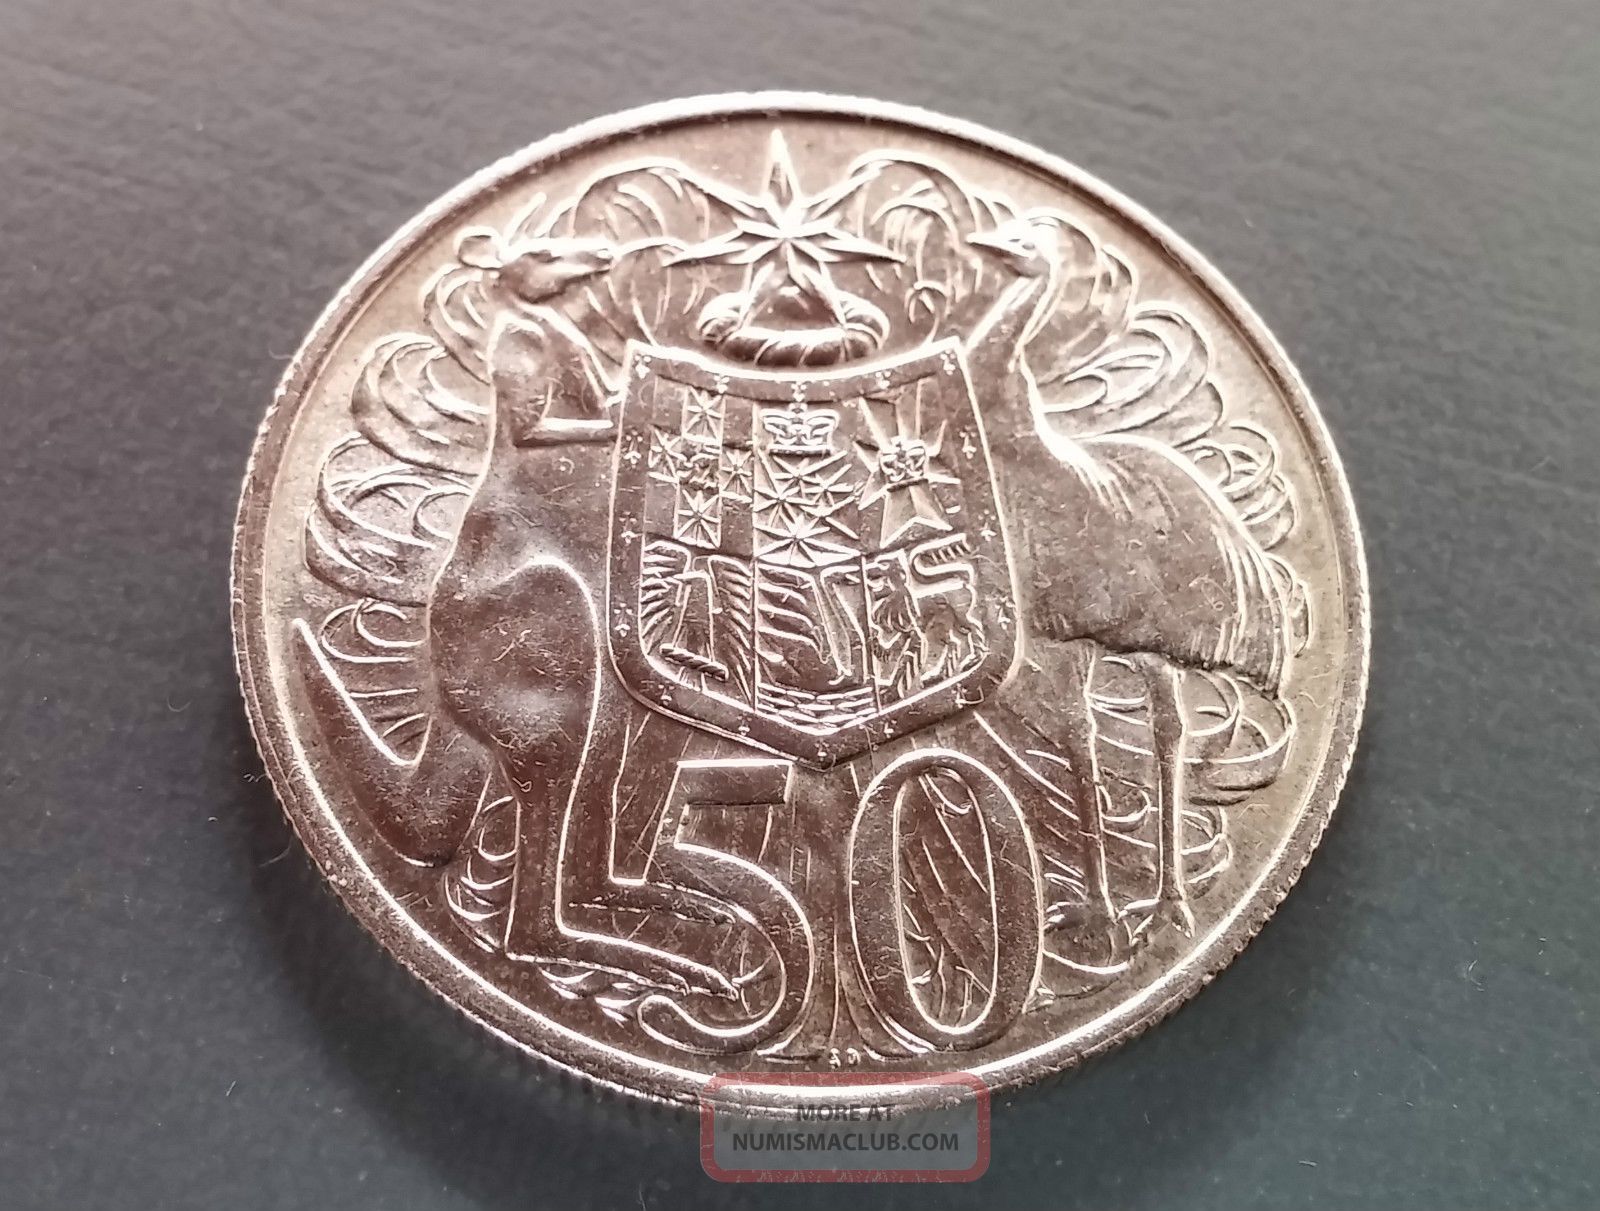 buy silver coins in australia